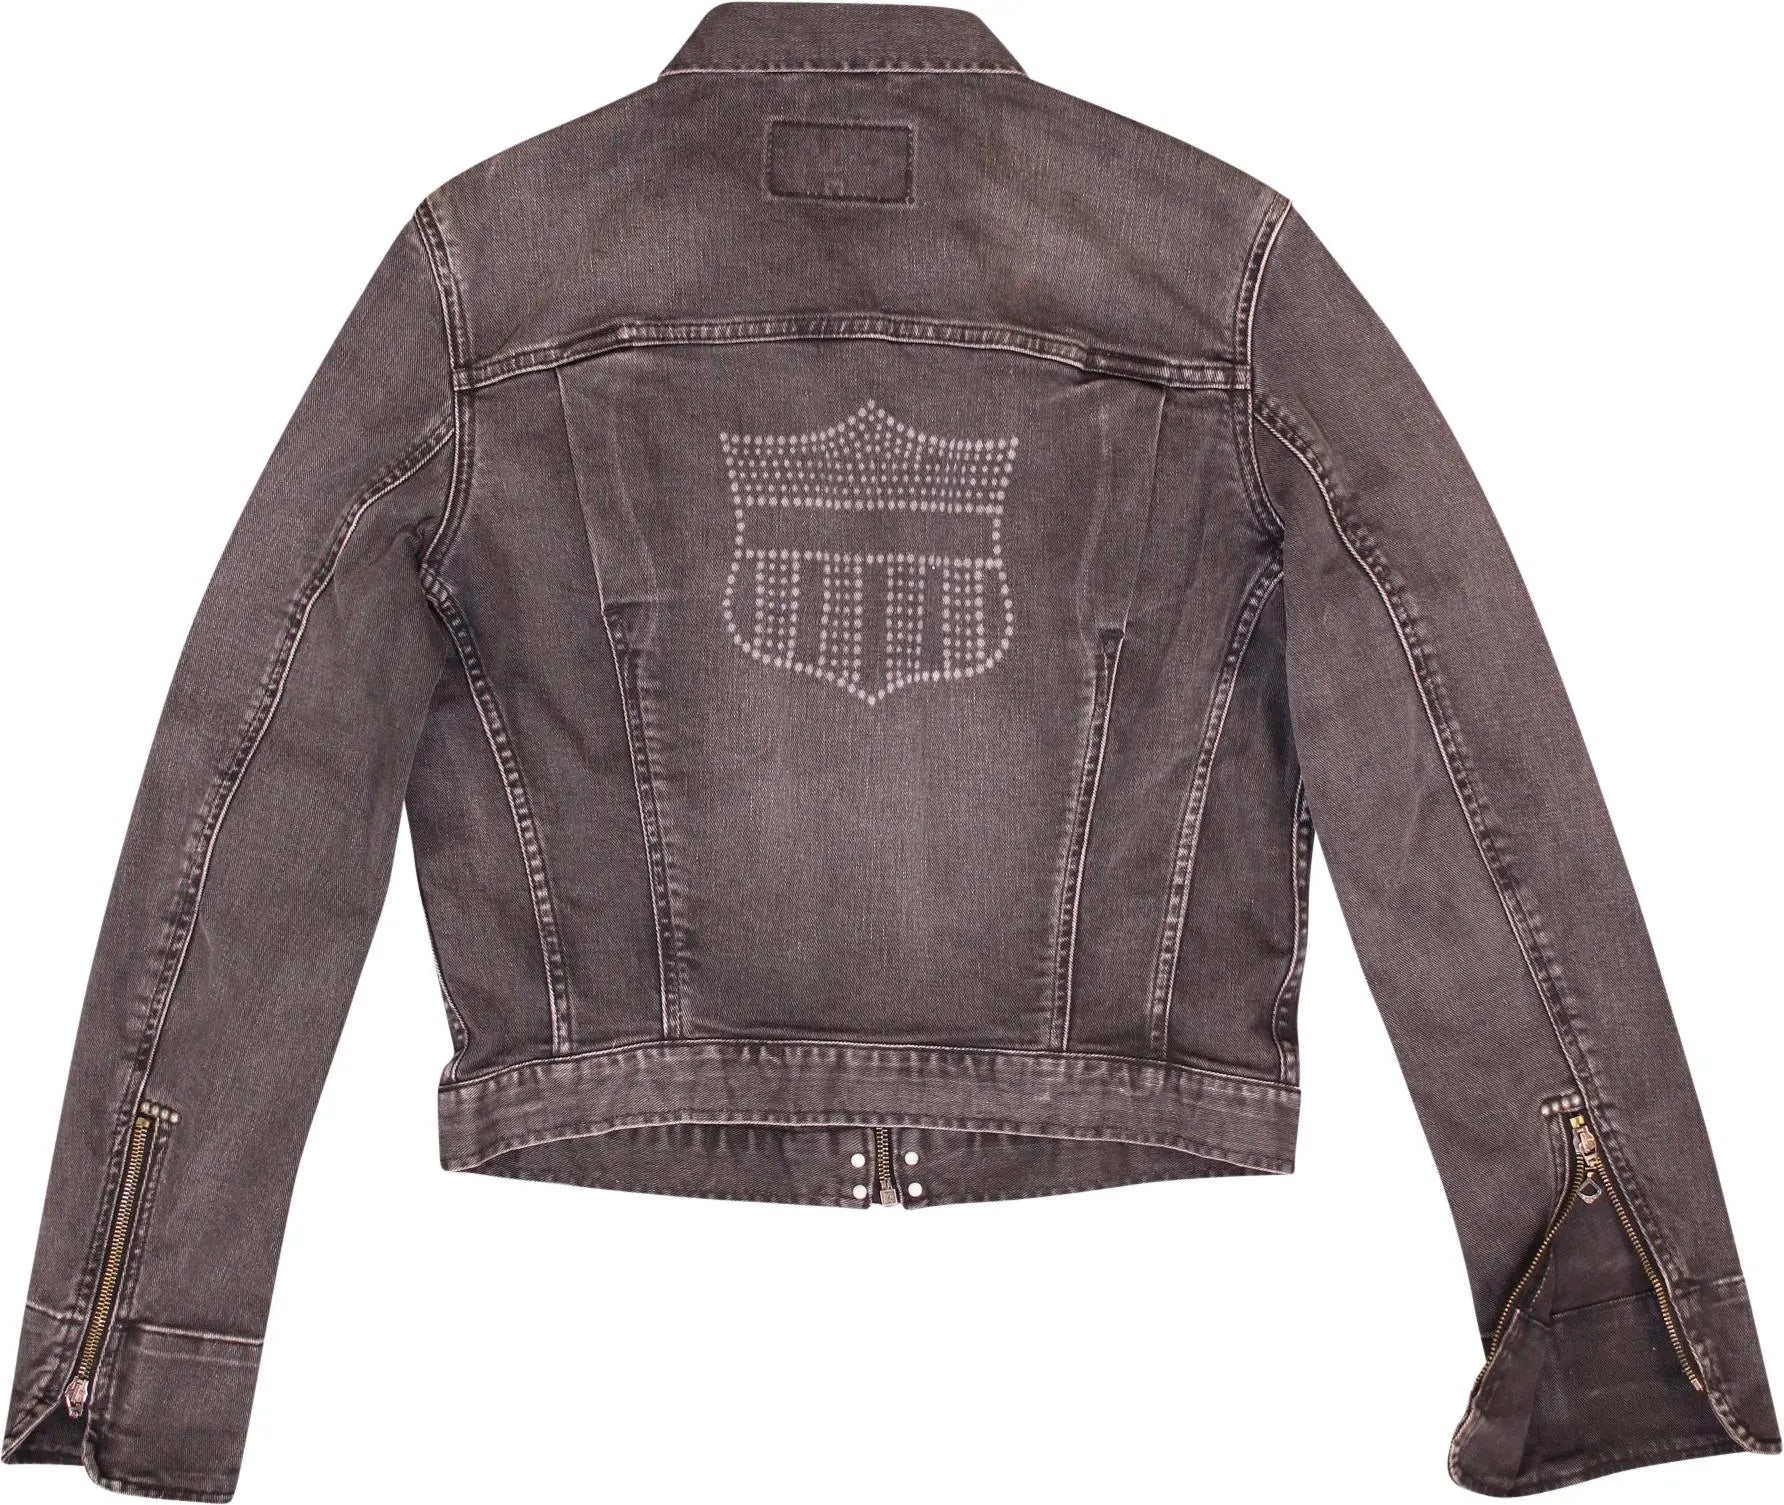 Levi's - Levi's Denim Jacket- ThriftTale.com - Vintage and second handclothing